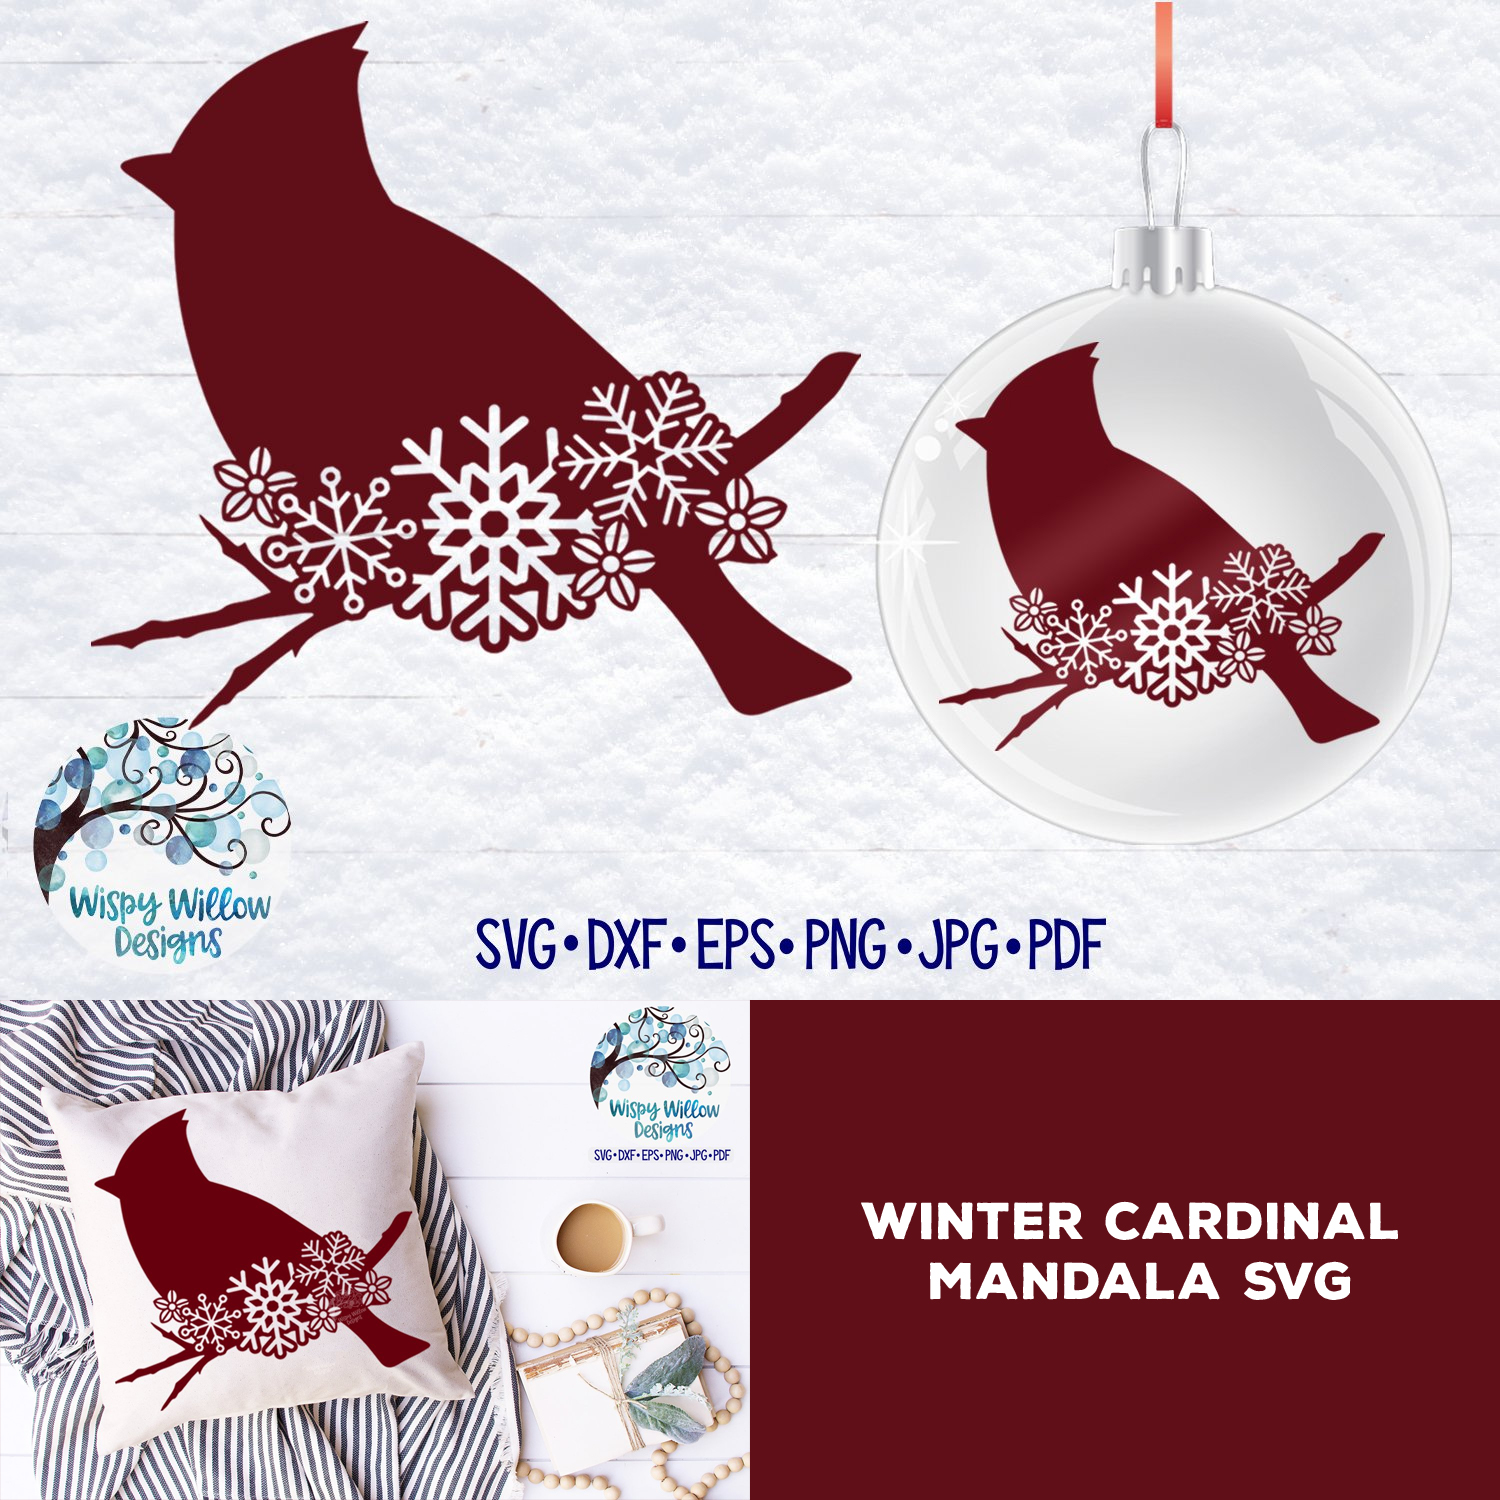 Winter cardinal mandala svg preview.